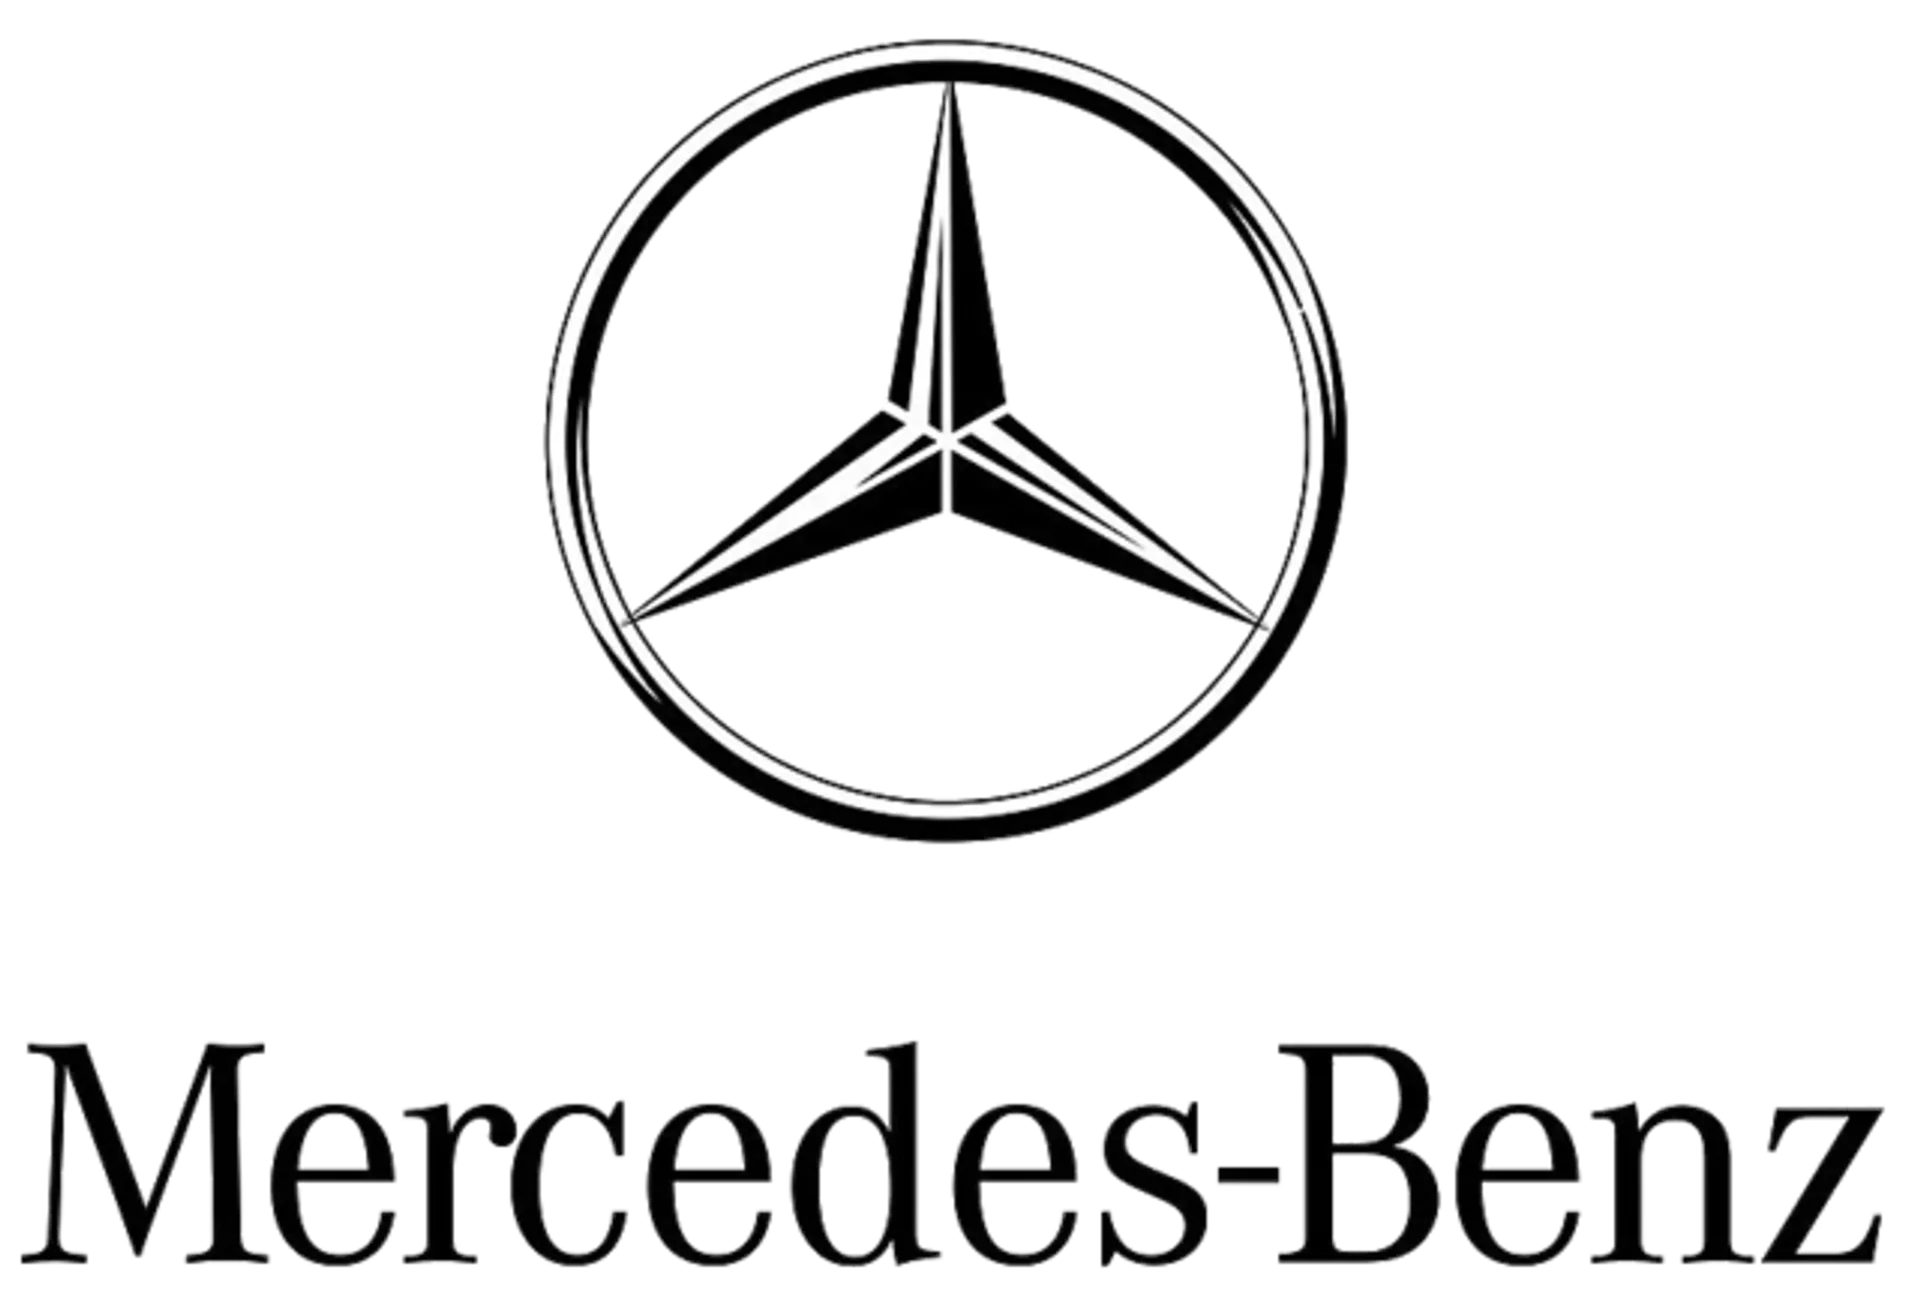 MERCEDES-BENZ logo